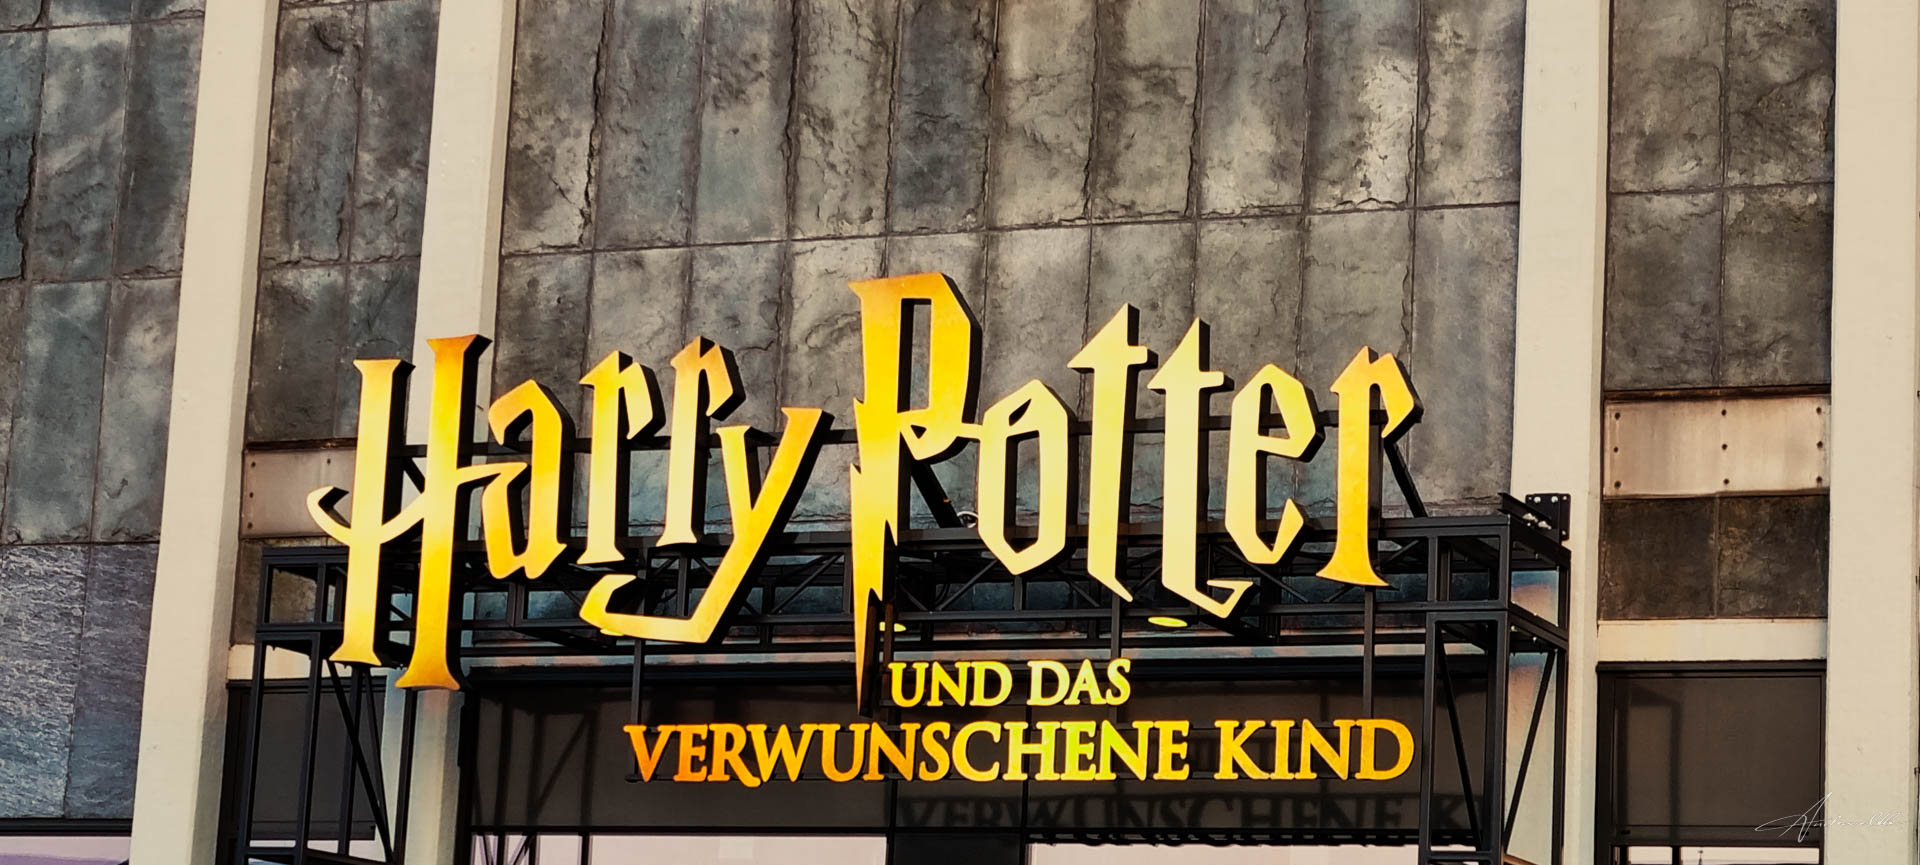 Hamburg & Harry Potter